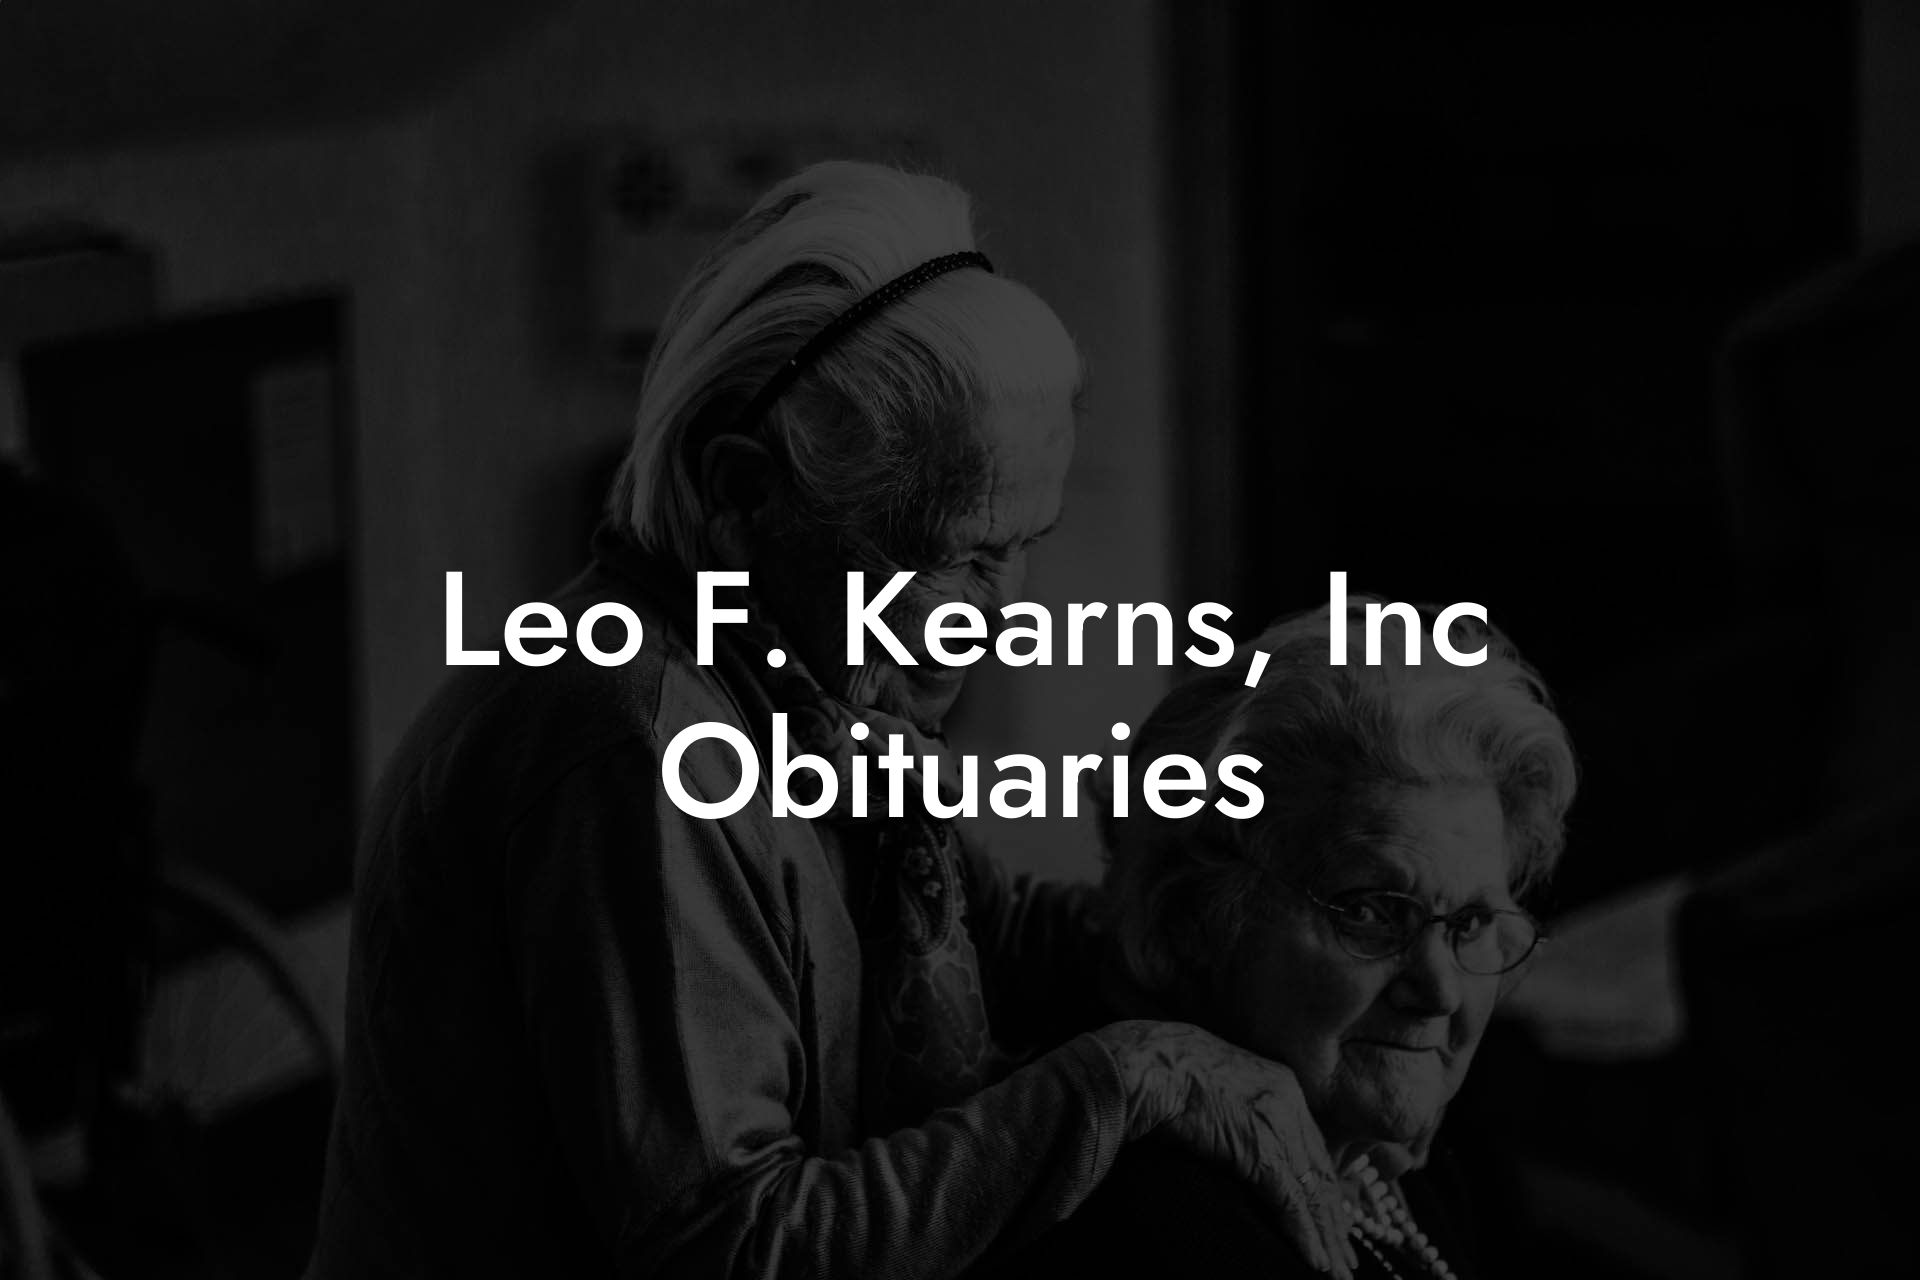 Leo F. Kearns, Inc Obituaries